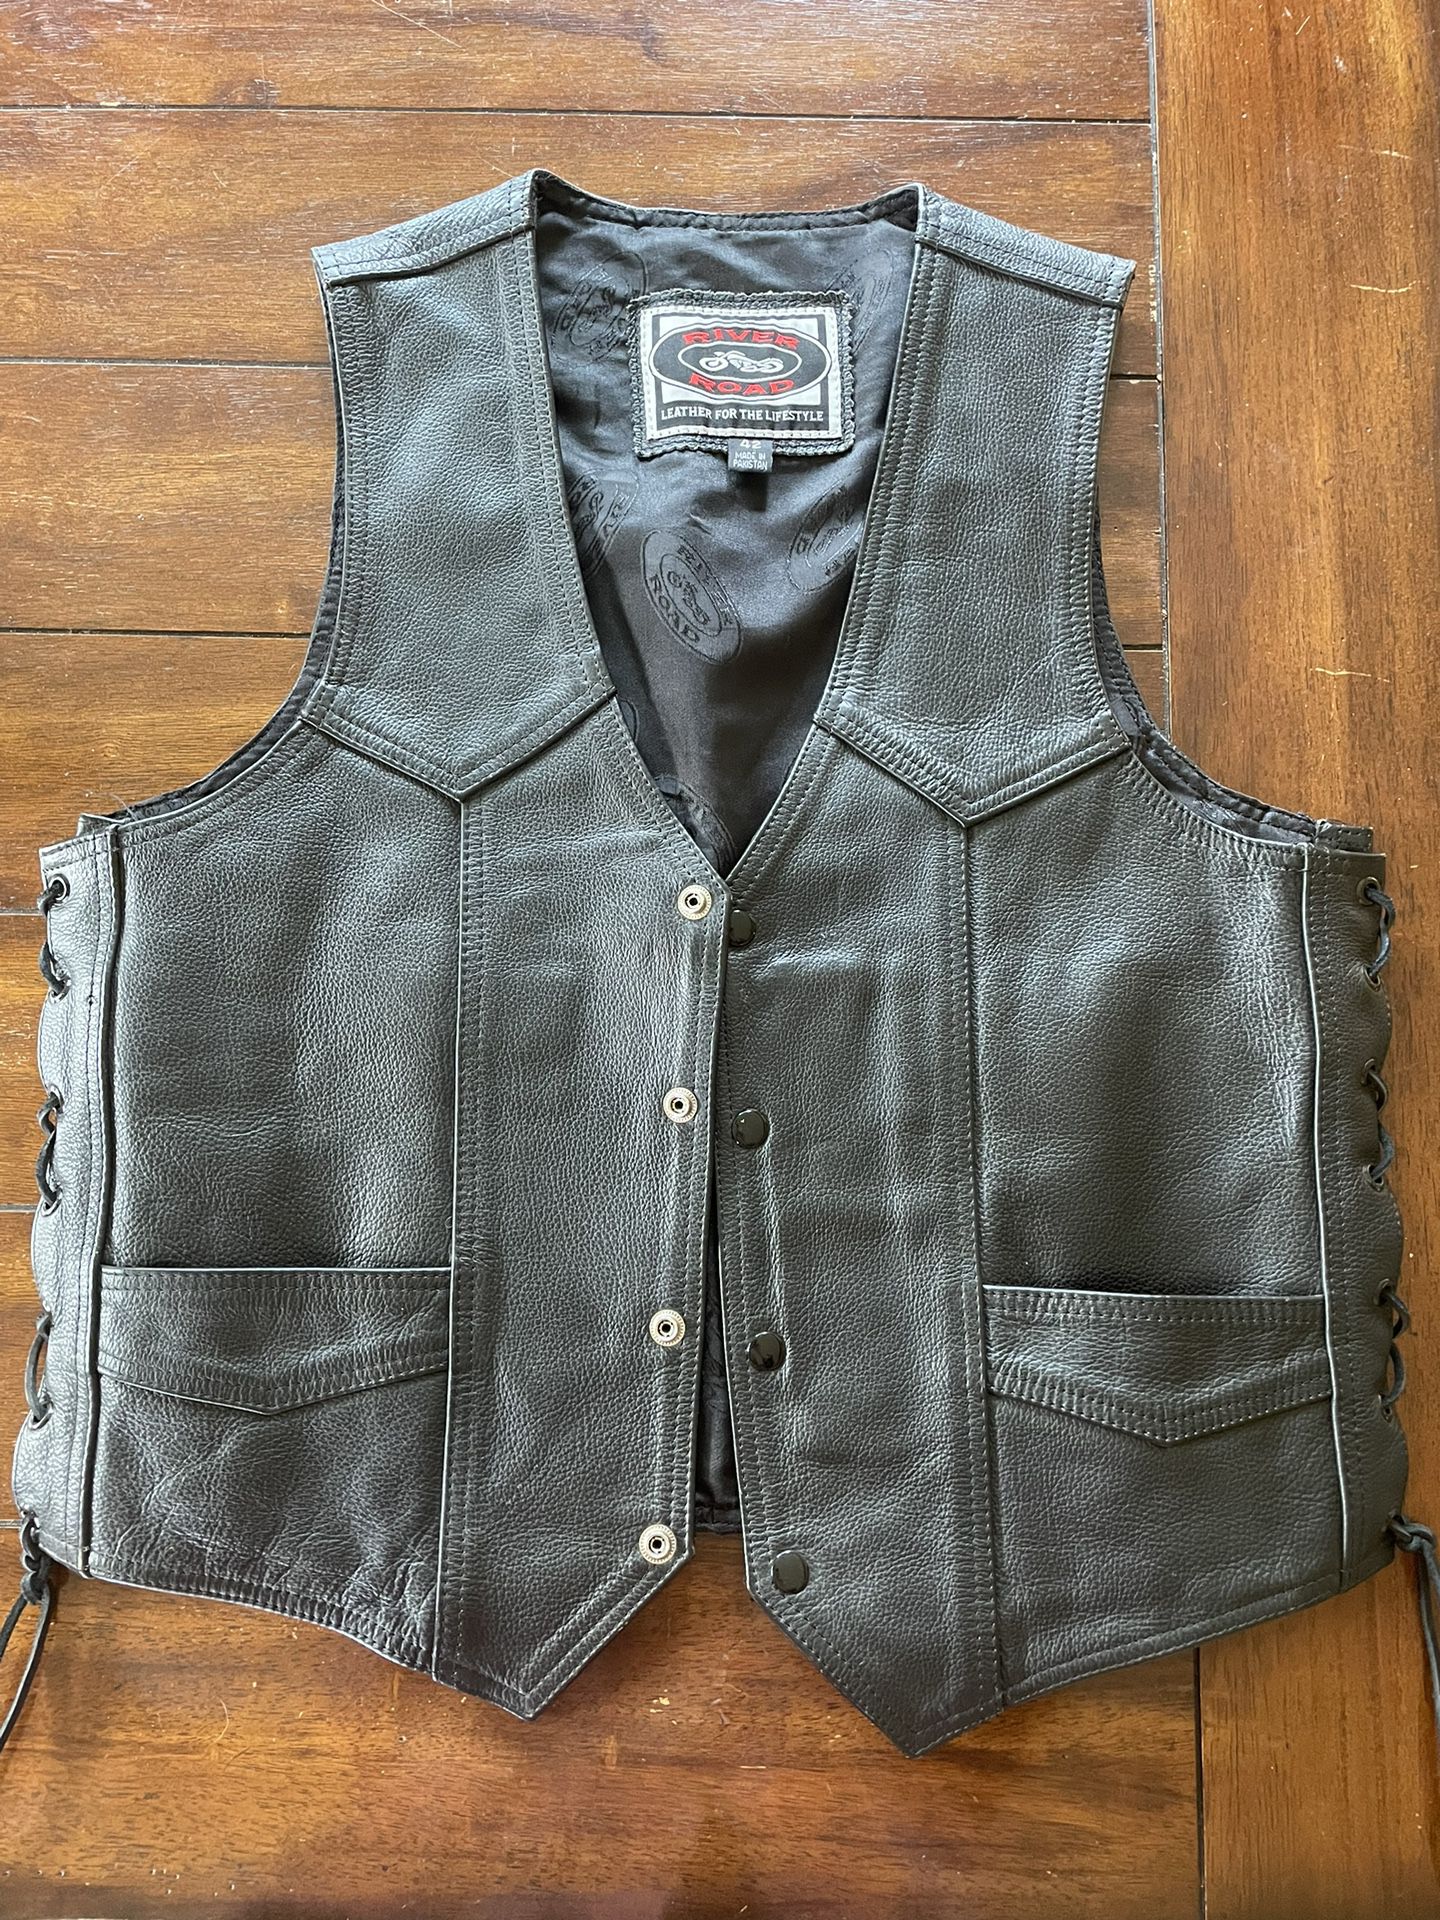 River Road Leather Vest (size 42)